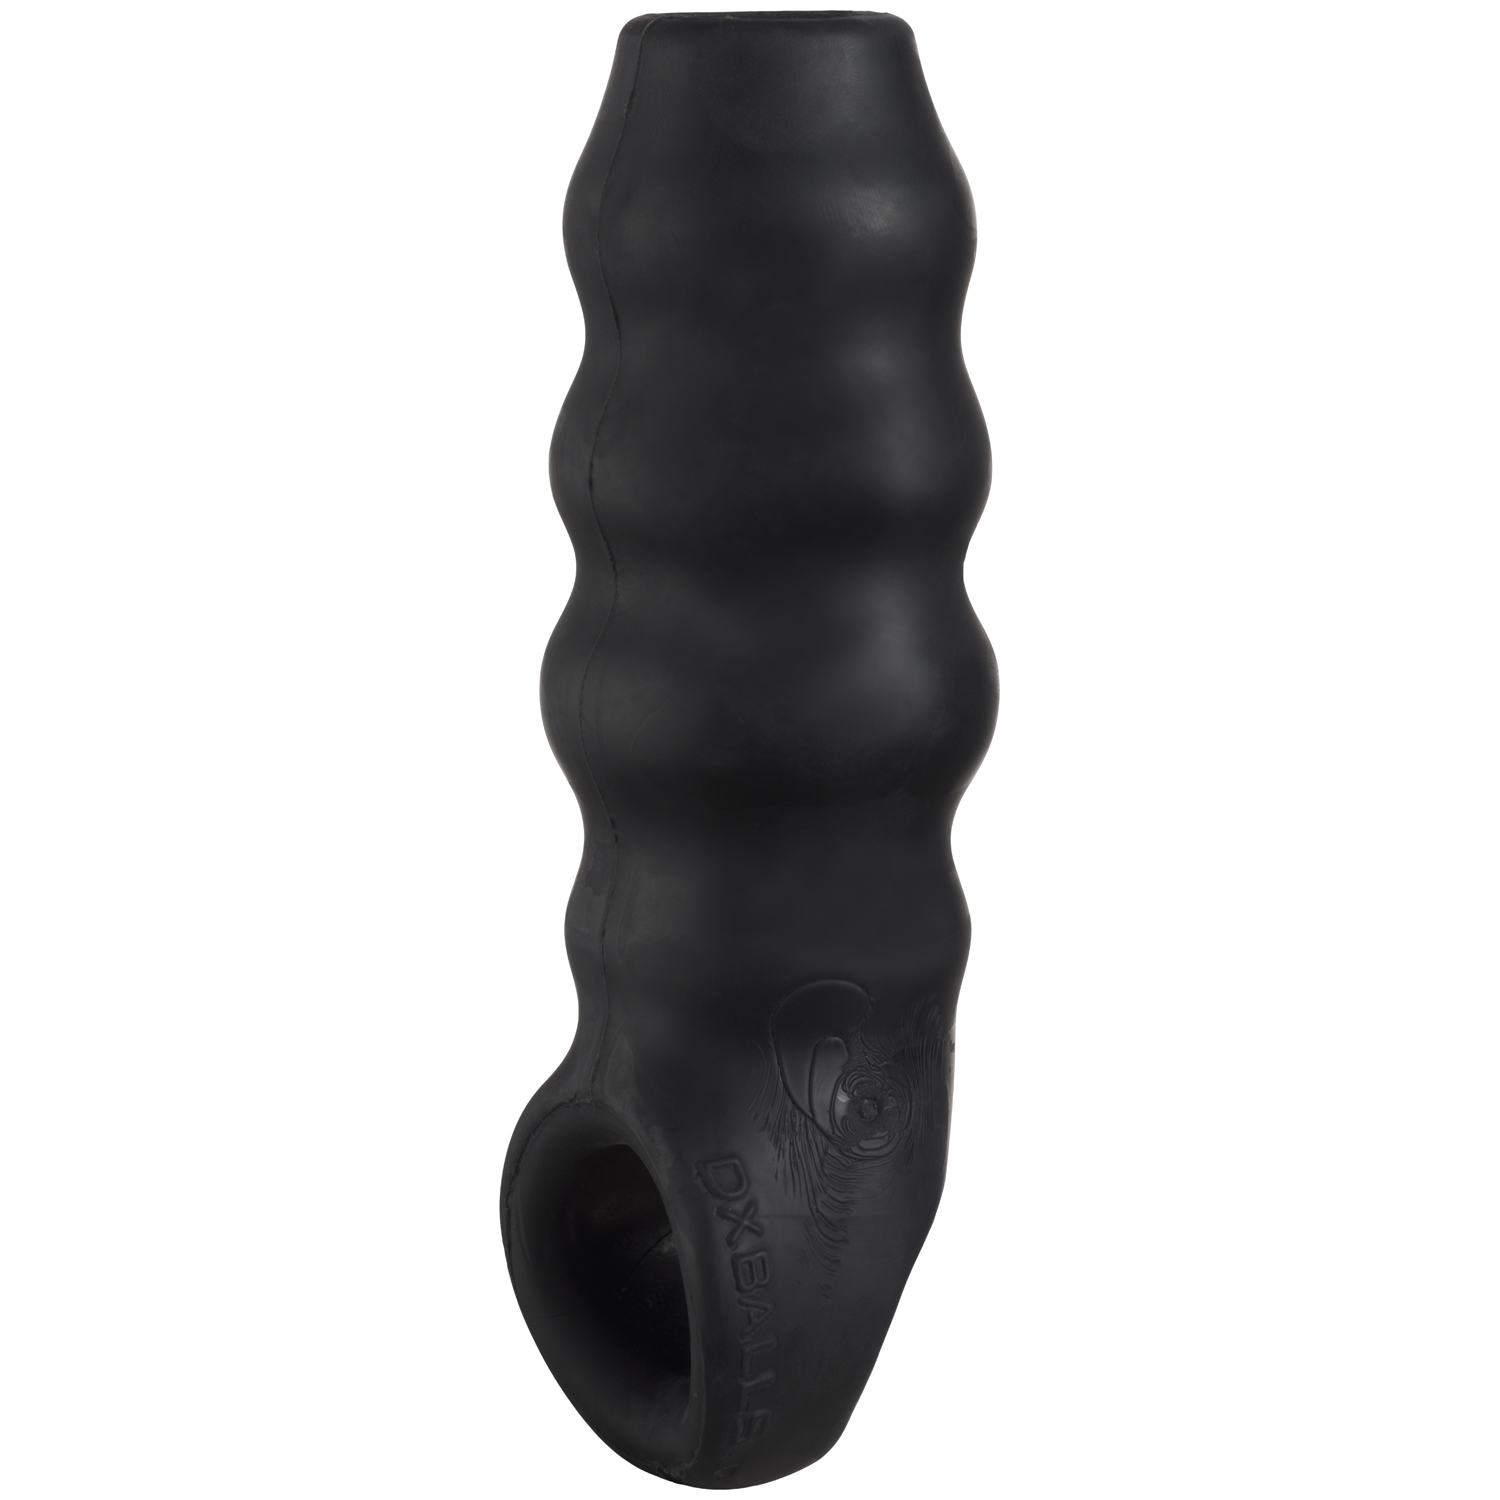 Oxballs Invader Penis Sleeve - Black thumbnail